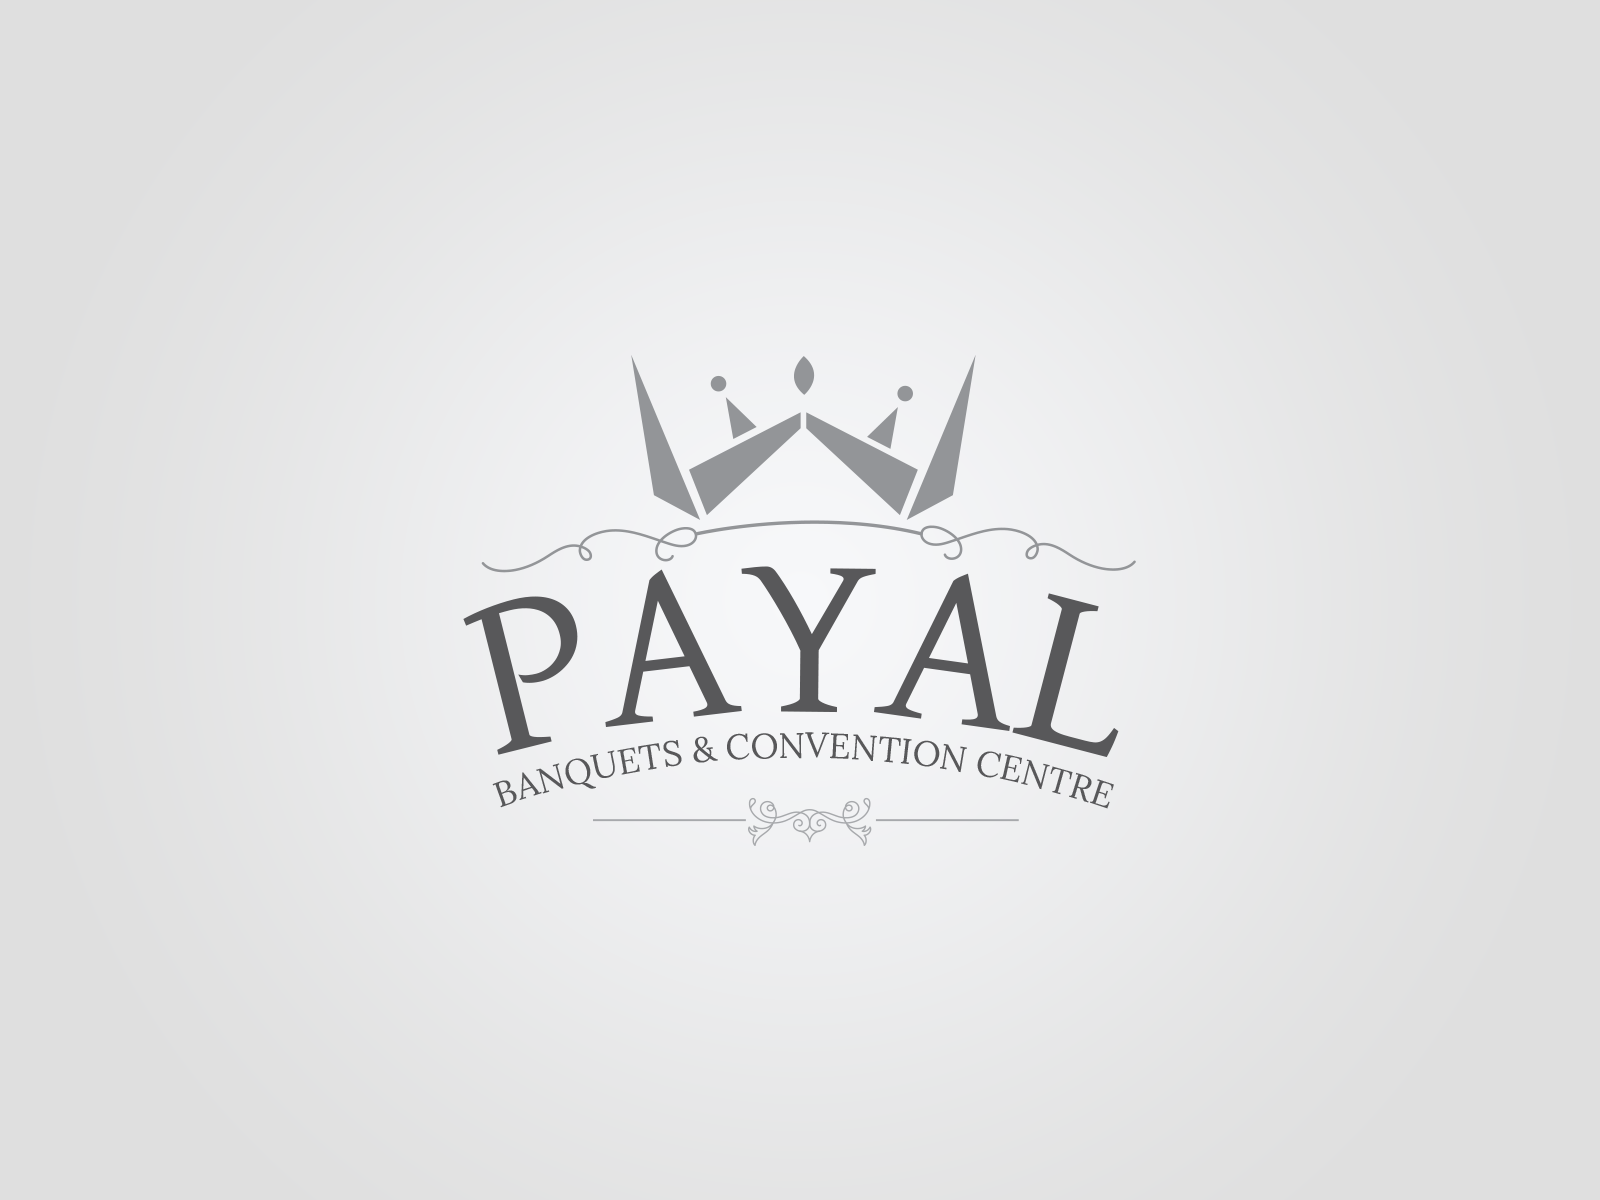 Logo#design#for#payal#name#graphic#design#trendingshorts#video - YouTube